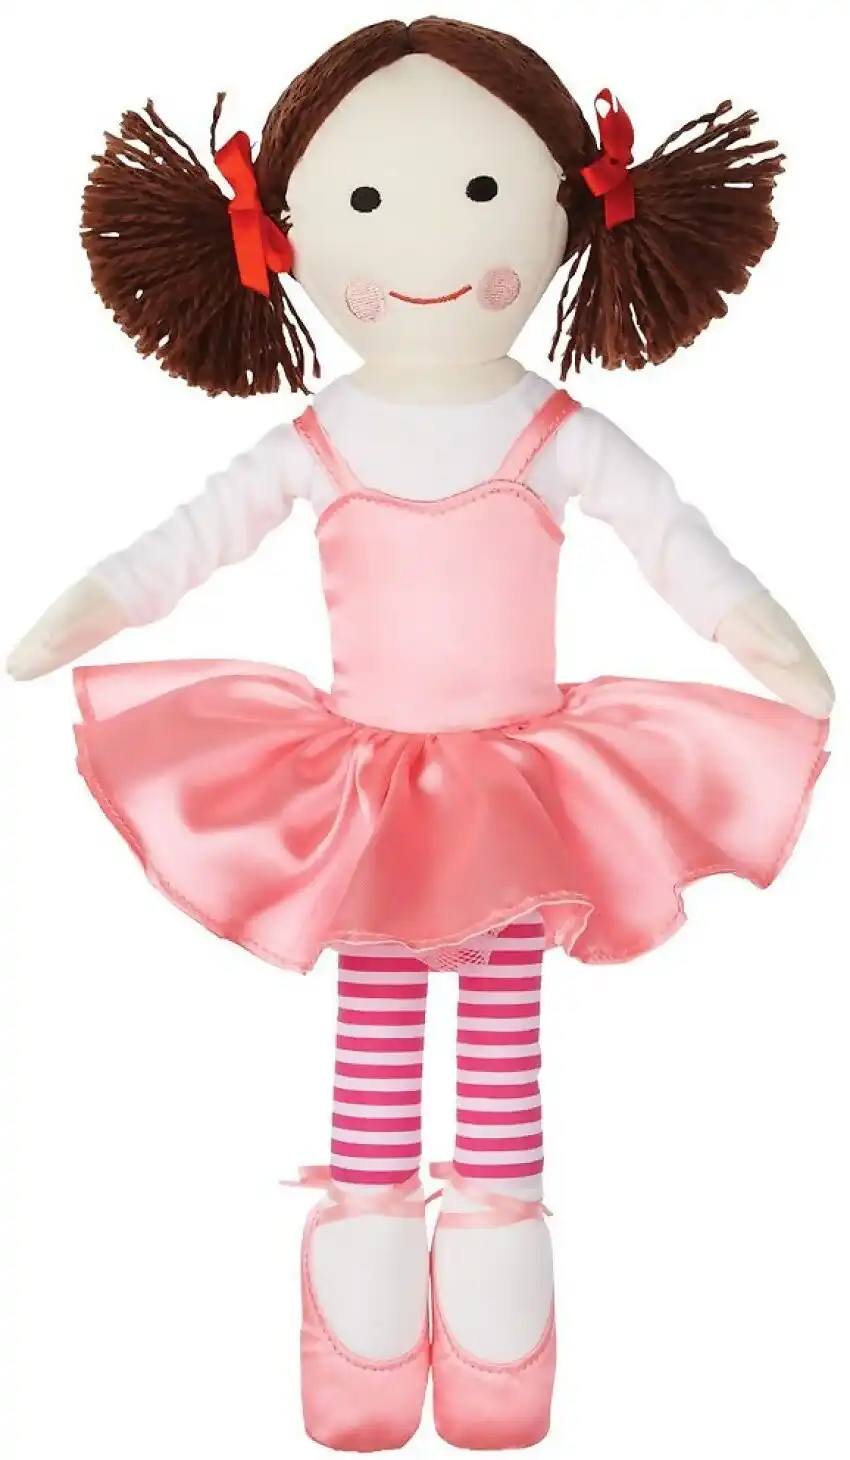 Play School - Jemma Ballerina Soft Doll 32cm